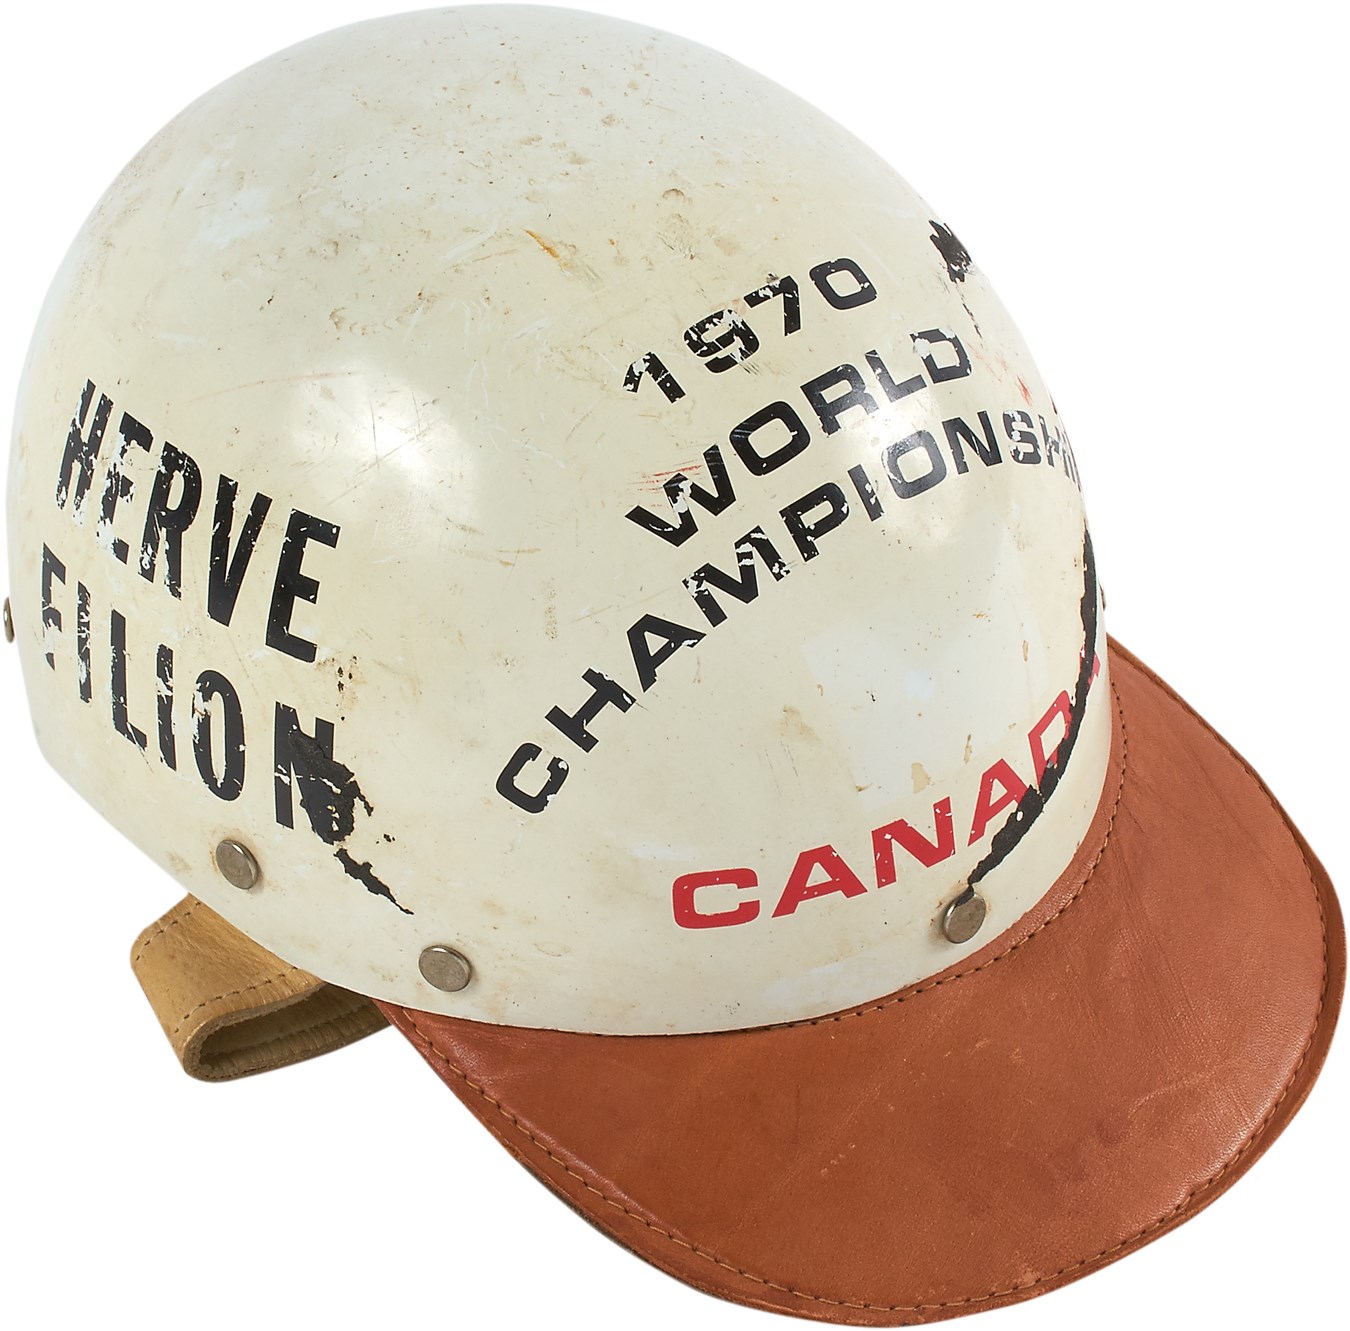 - Historic 1970 Herve Filion Race Worn Helmet from Inaugural World Driving Championship